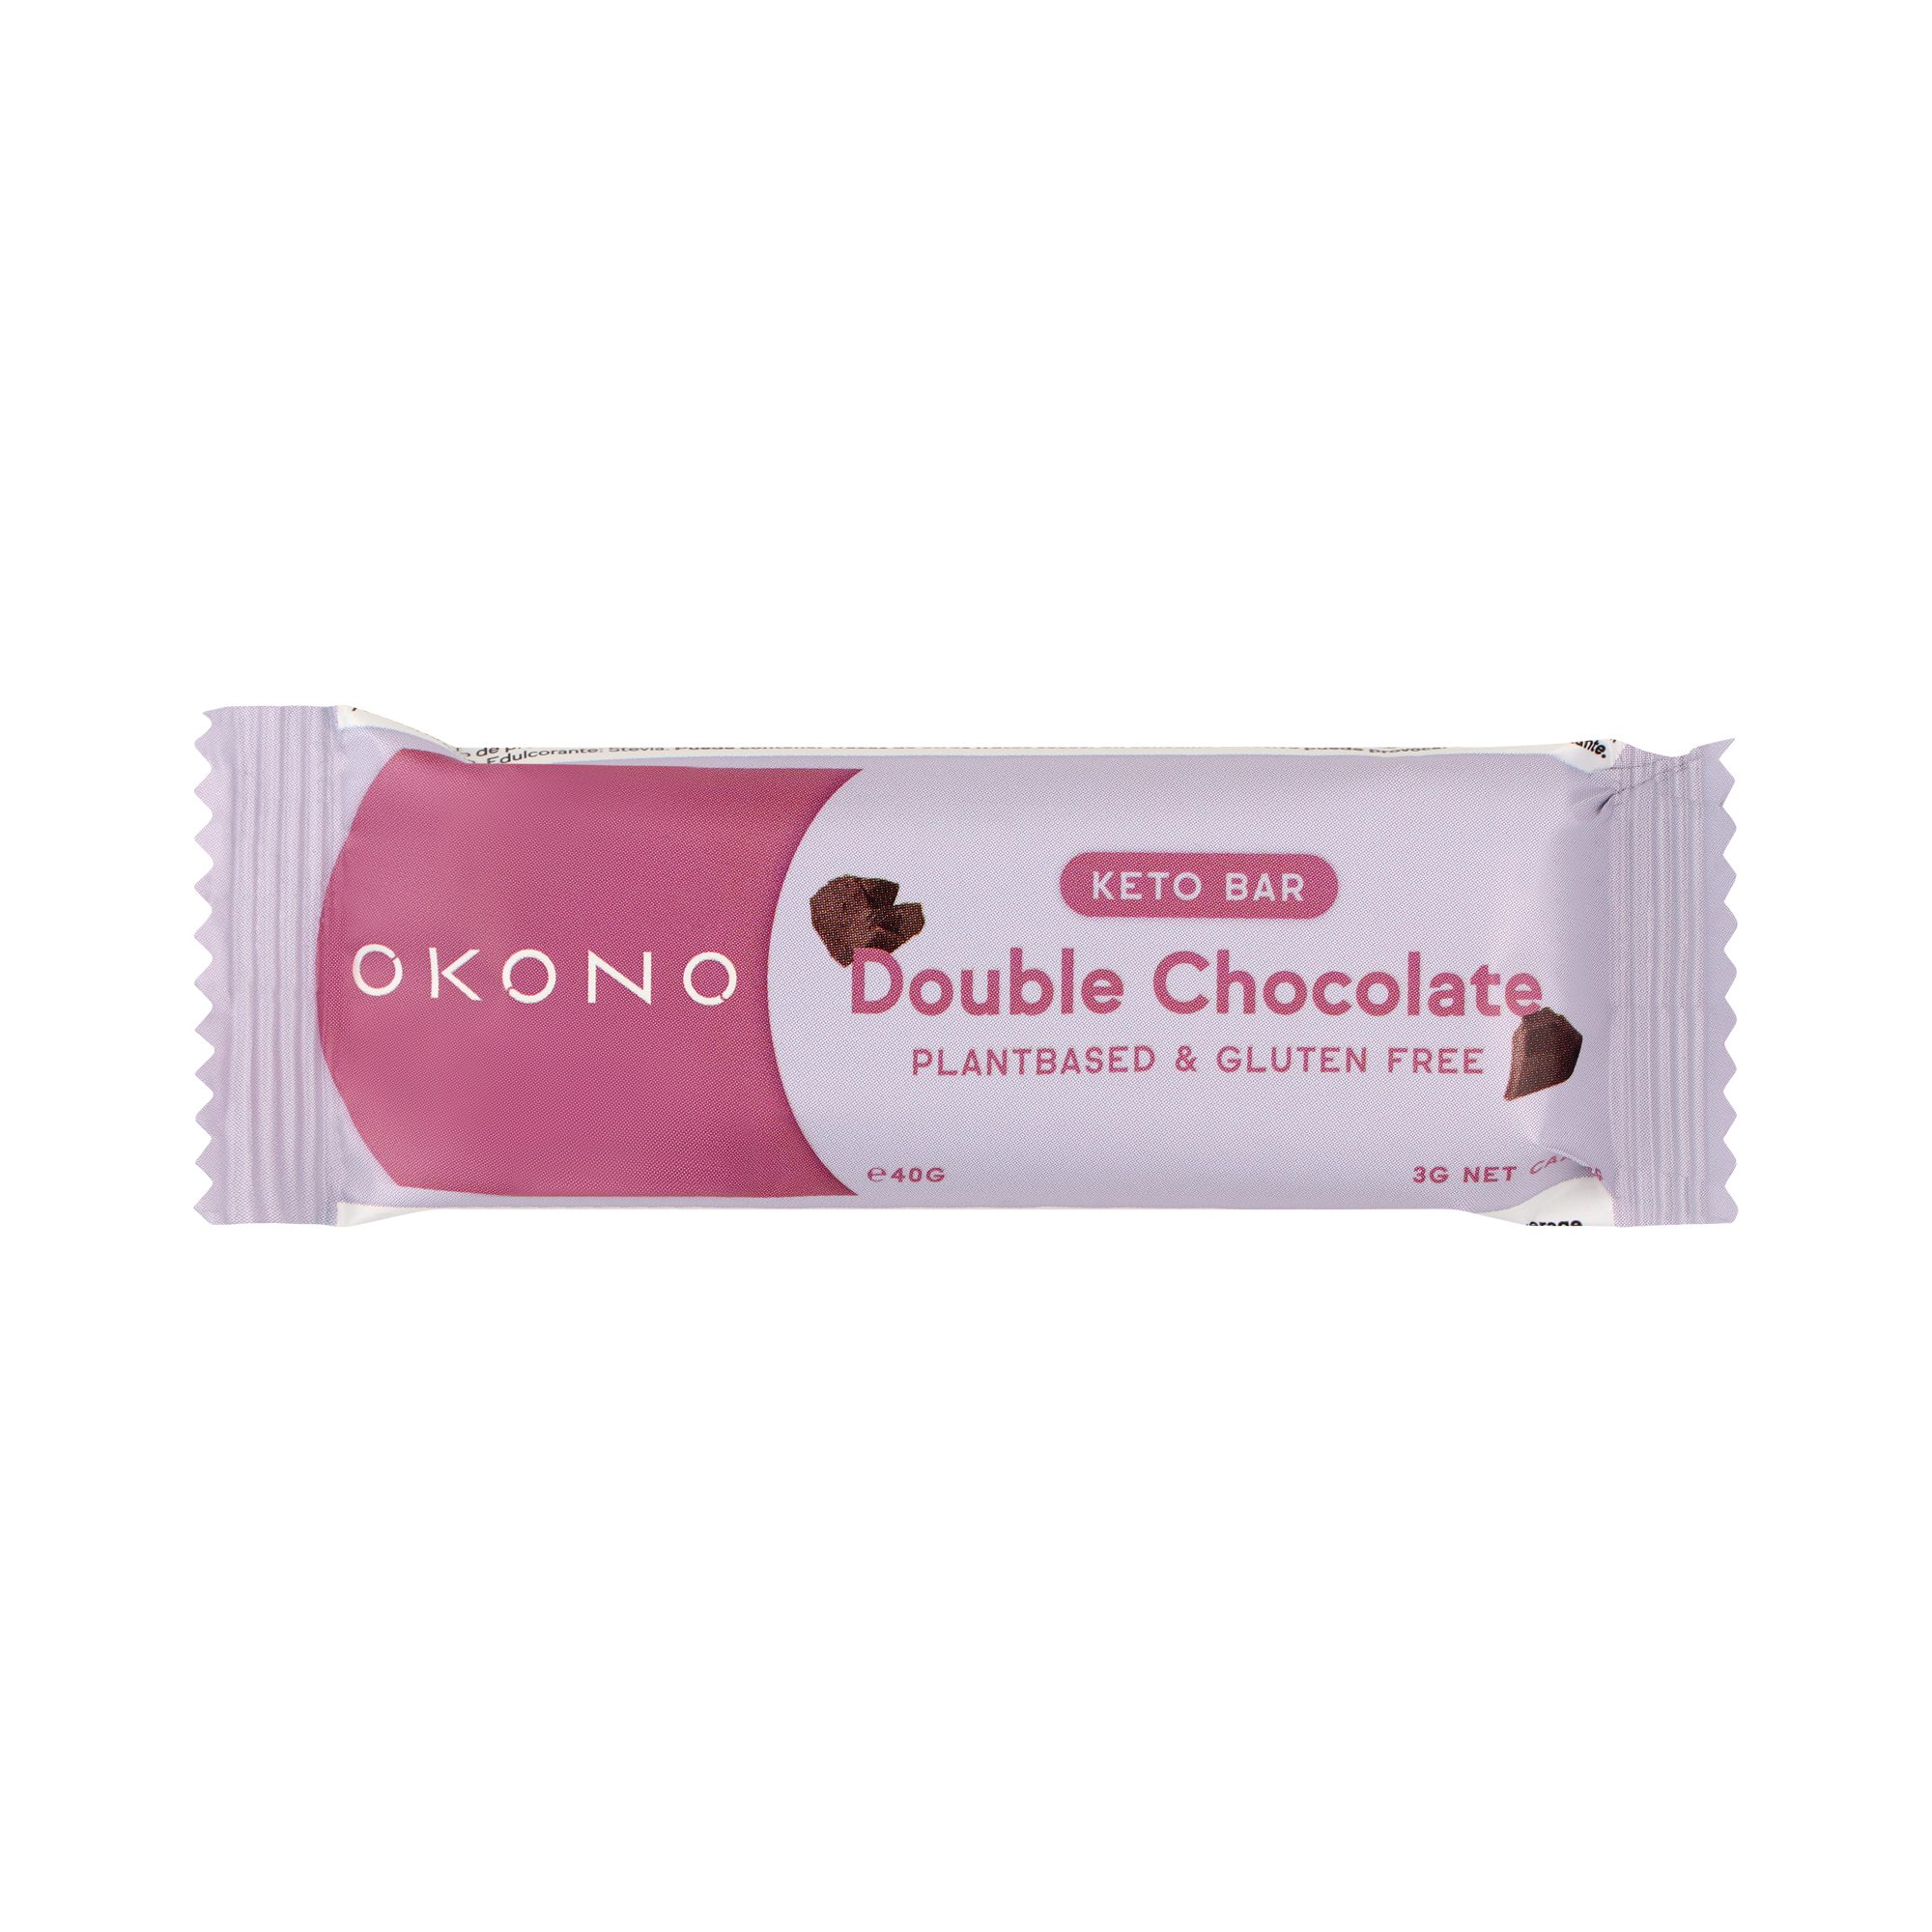 Okono Double Chocolate Keto Bar